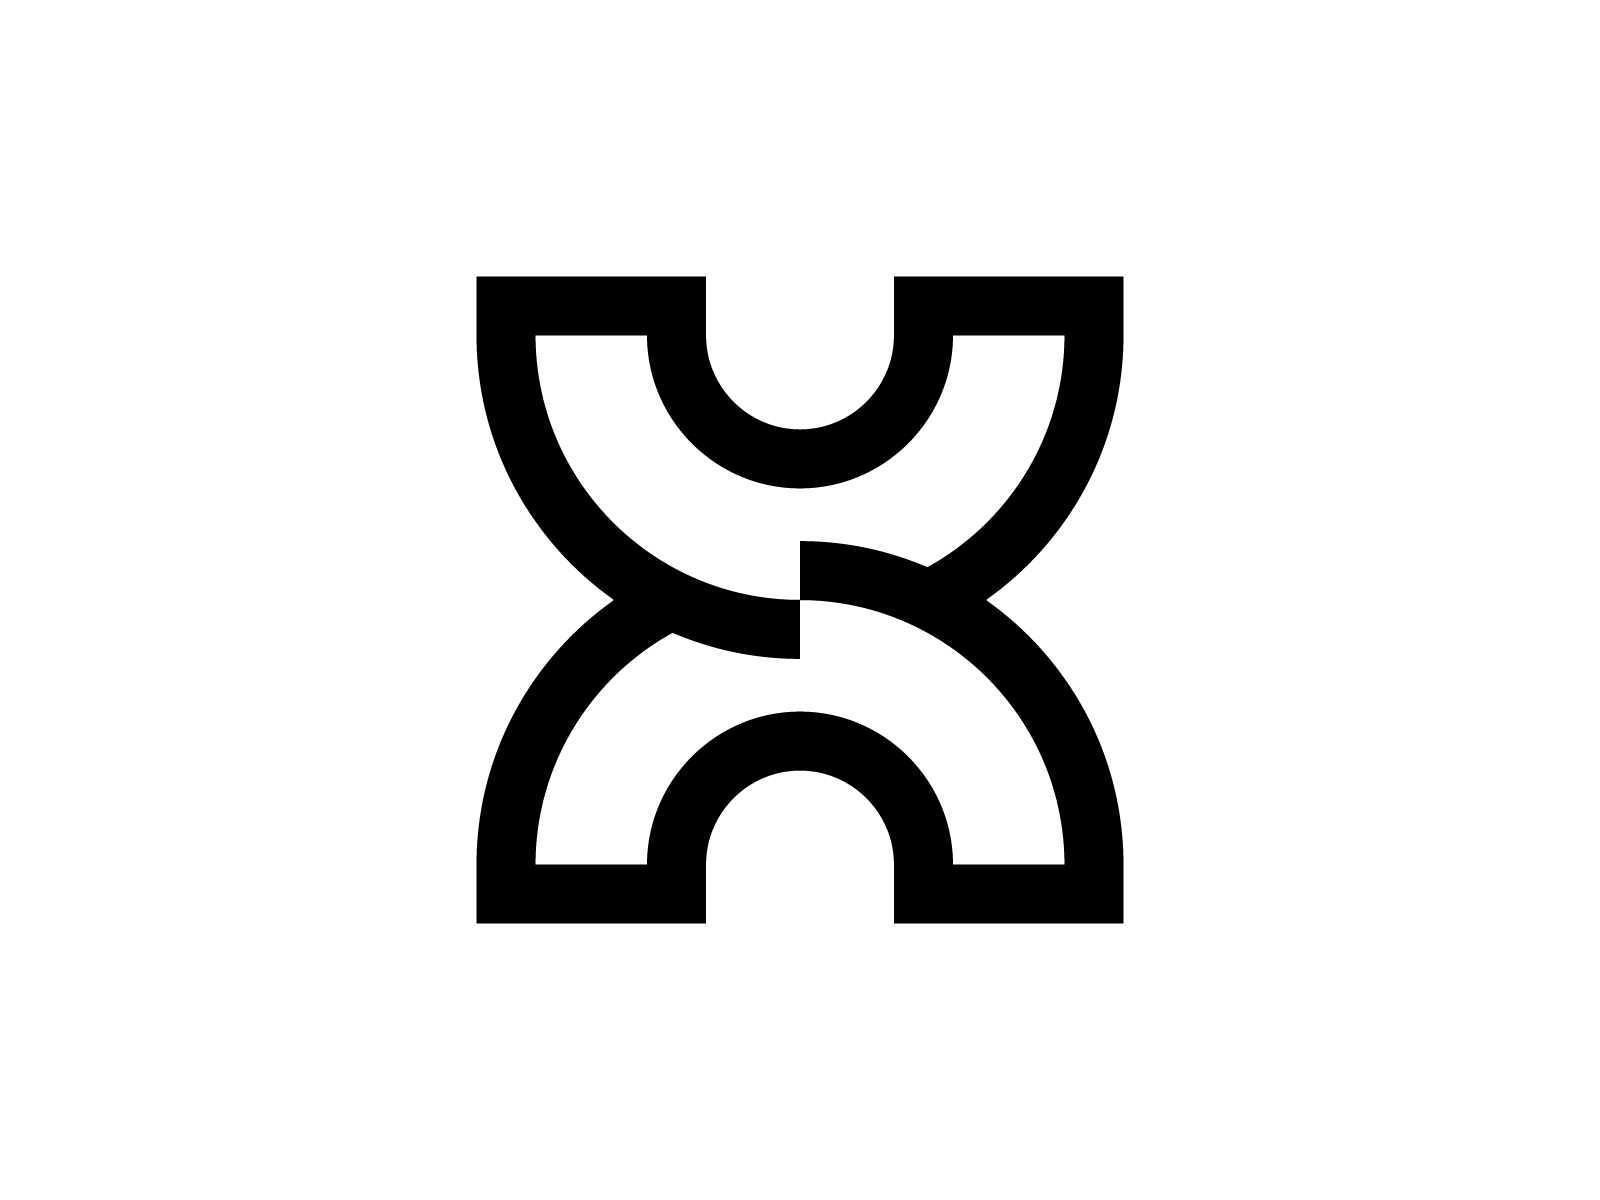 X logo mark by Muhammad Aslam on Dribbble